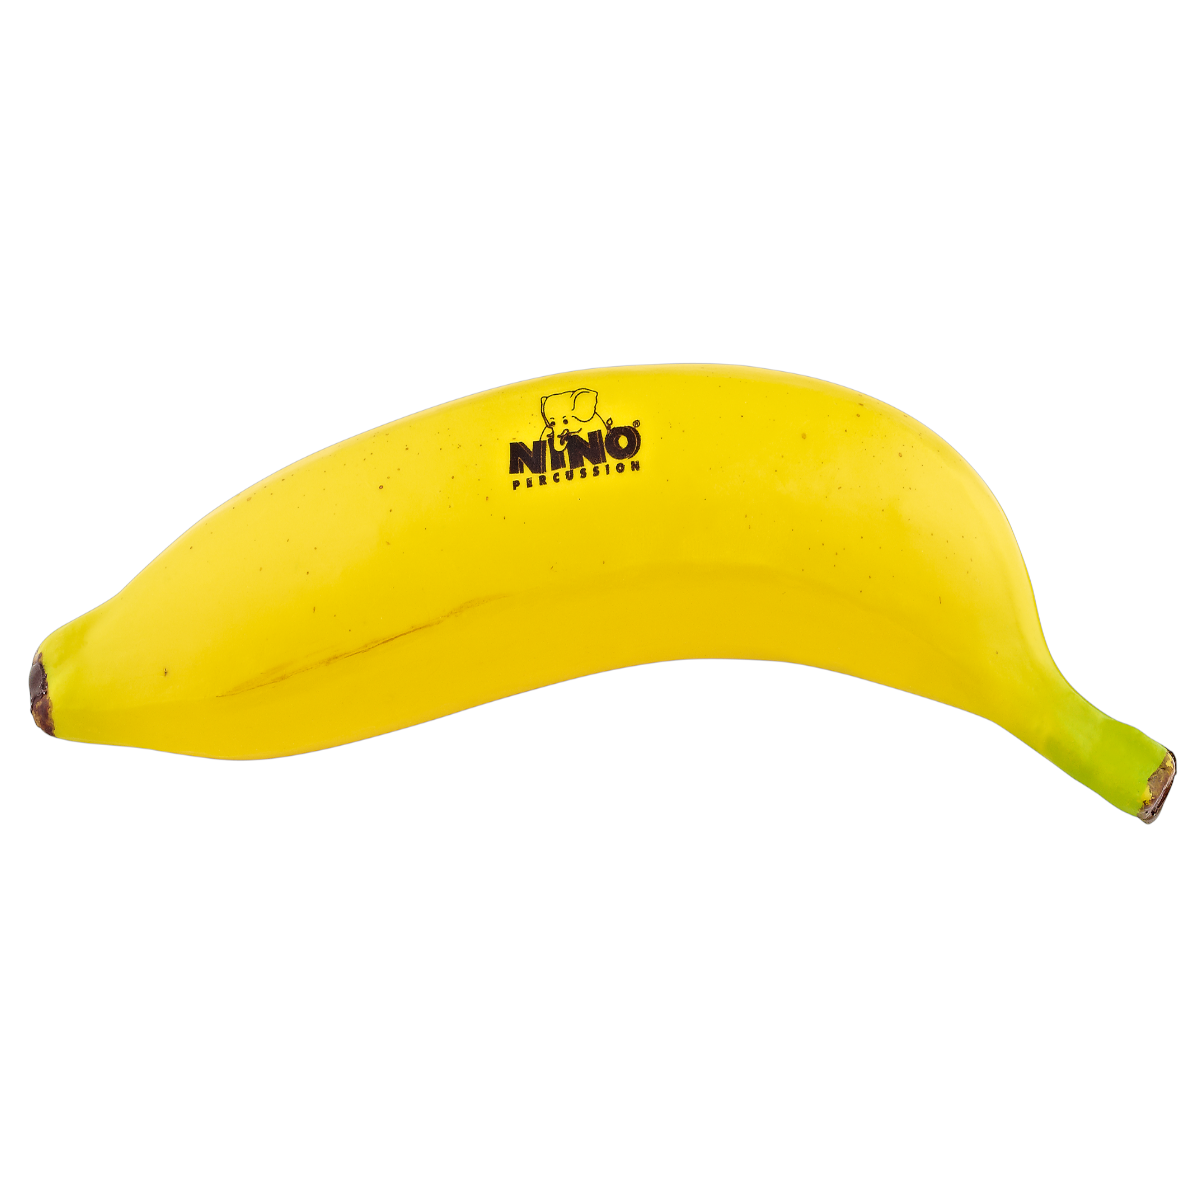 Nino Percussion Fruit & Vegetable Shaker - Banana